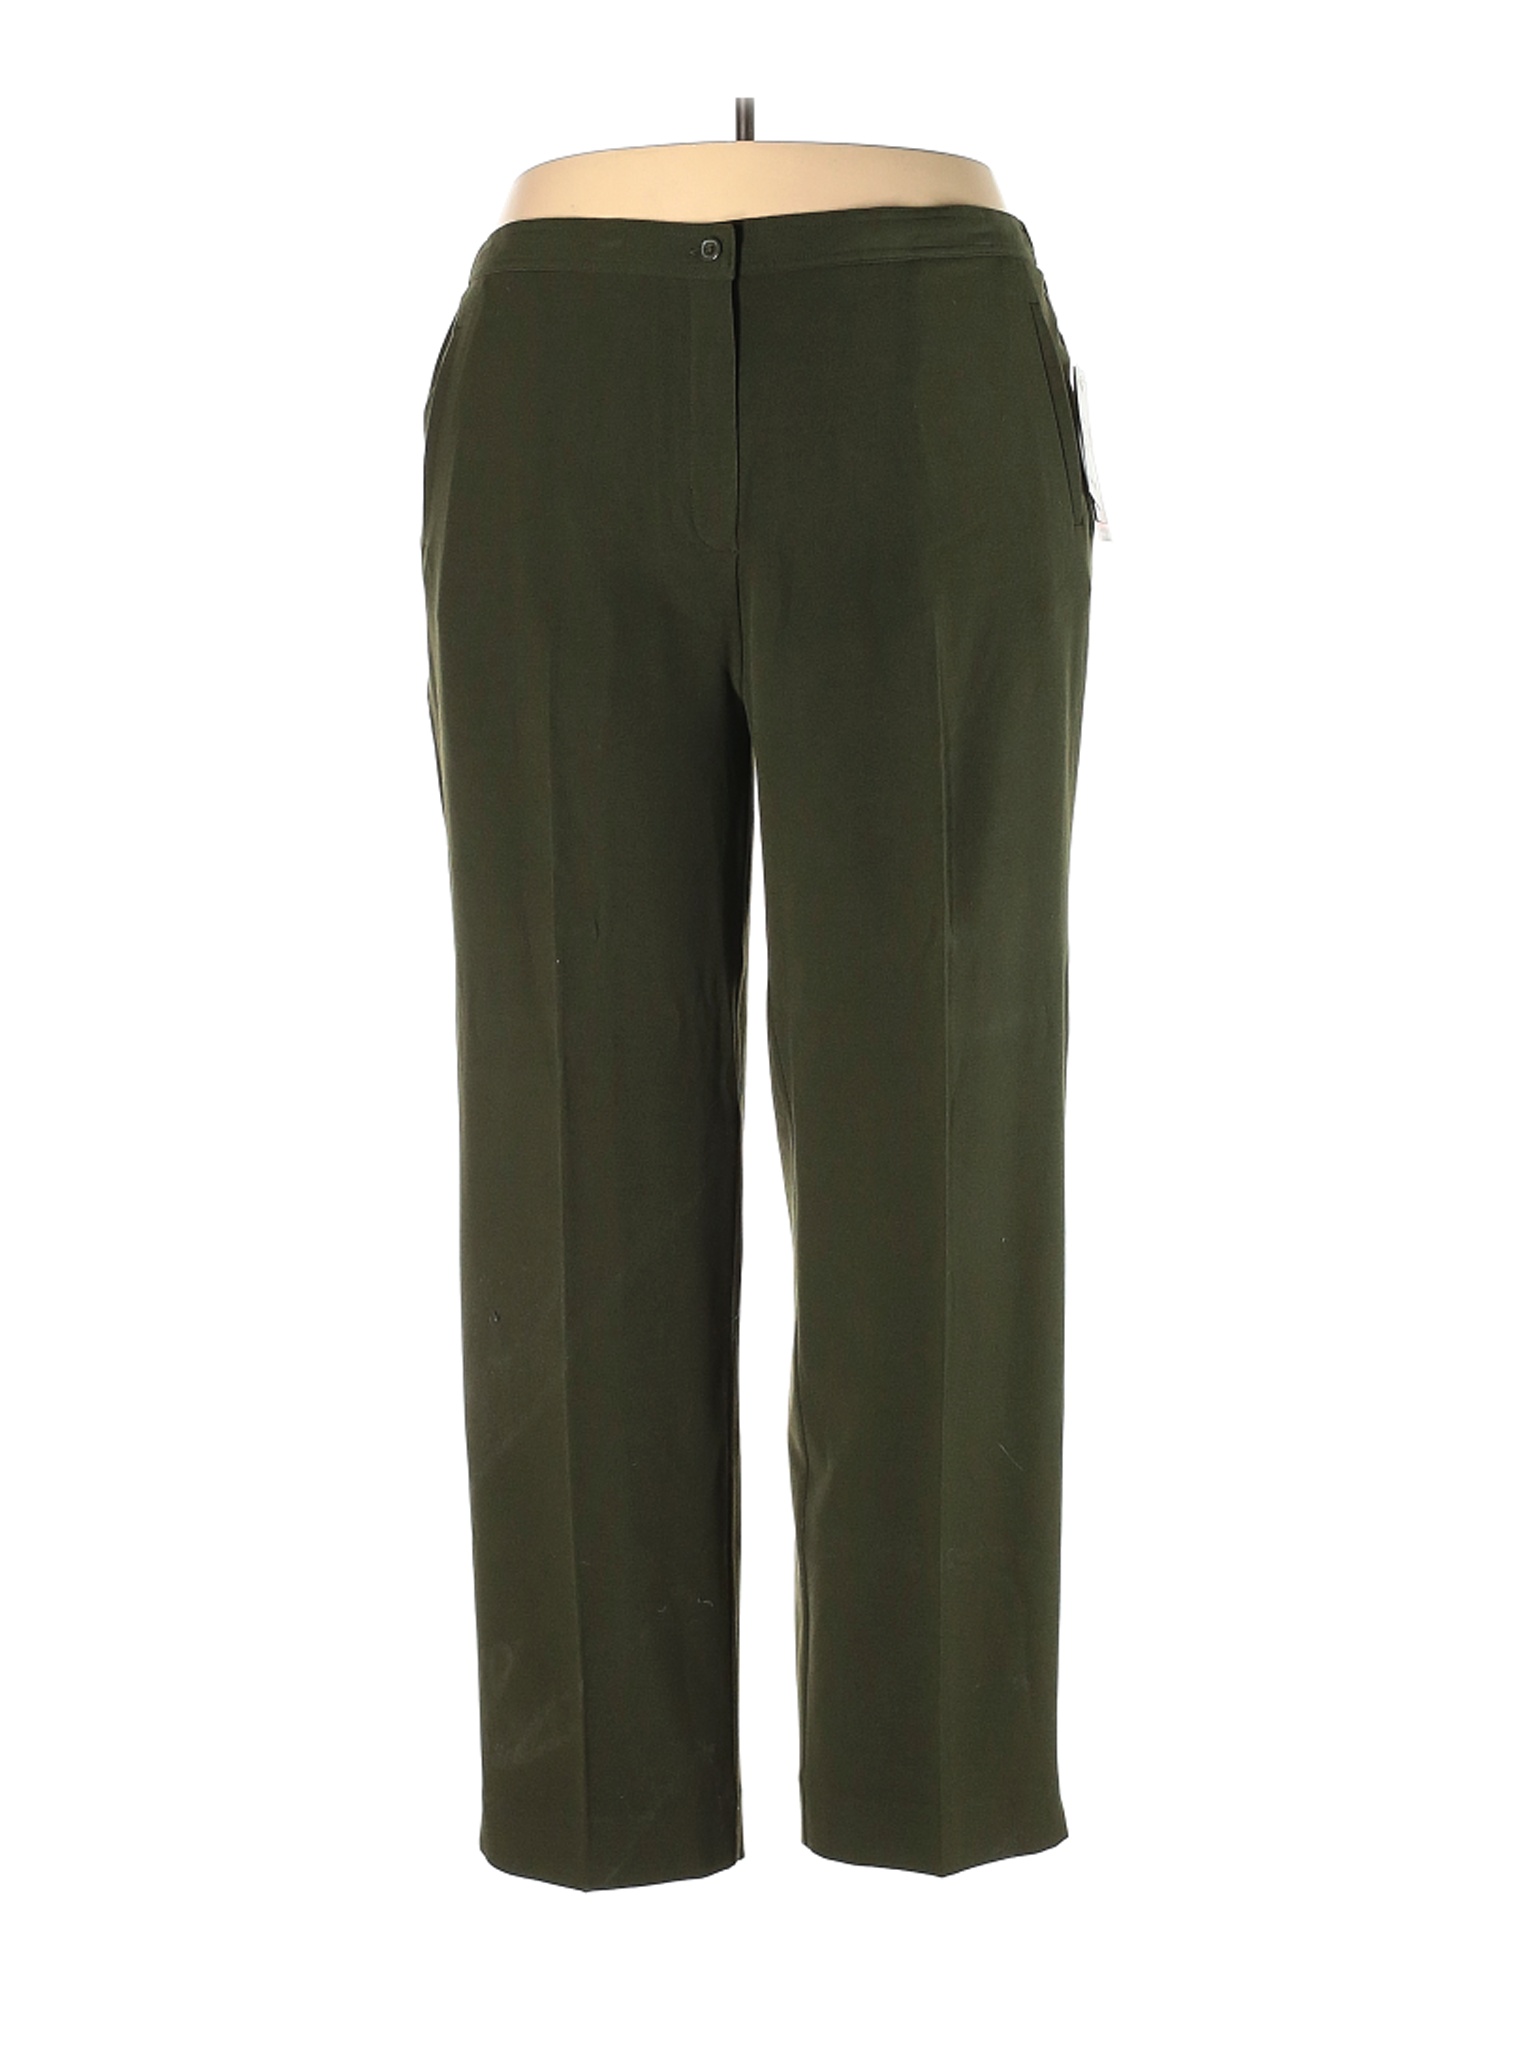 NWT Maggie Barnes Women Green Dress Pants 18 Plus | eBay